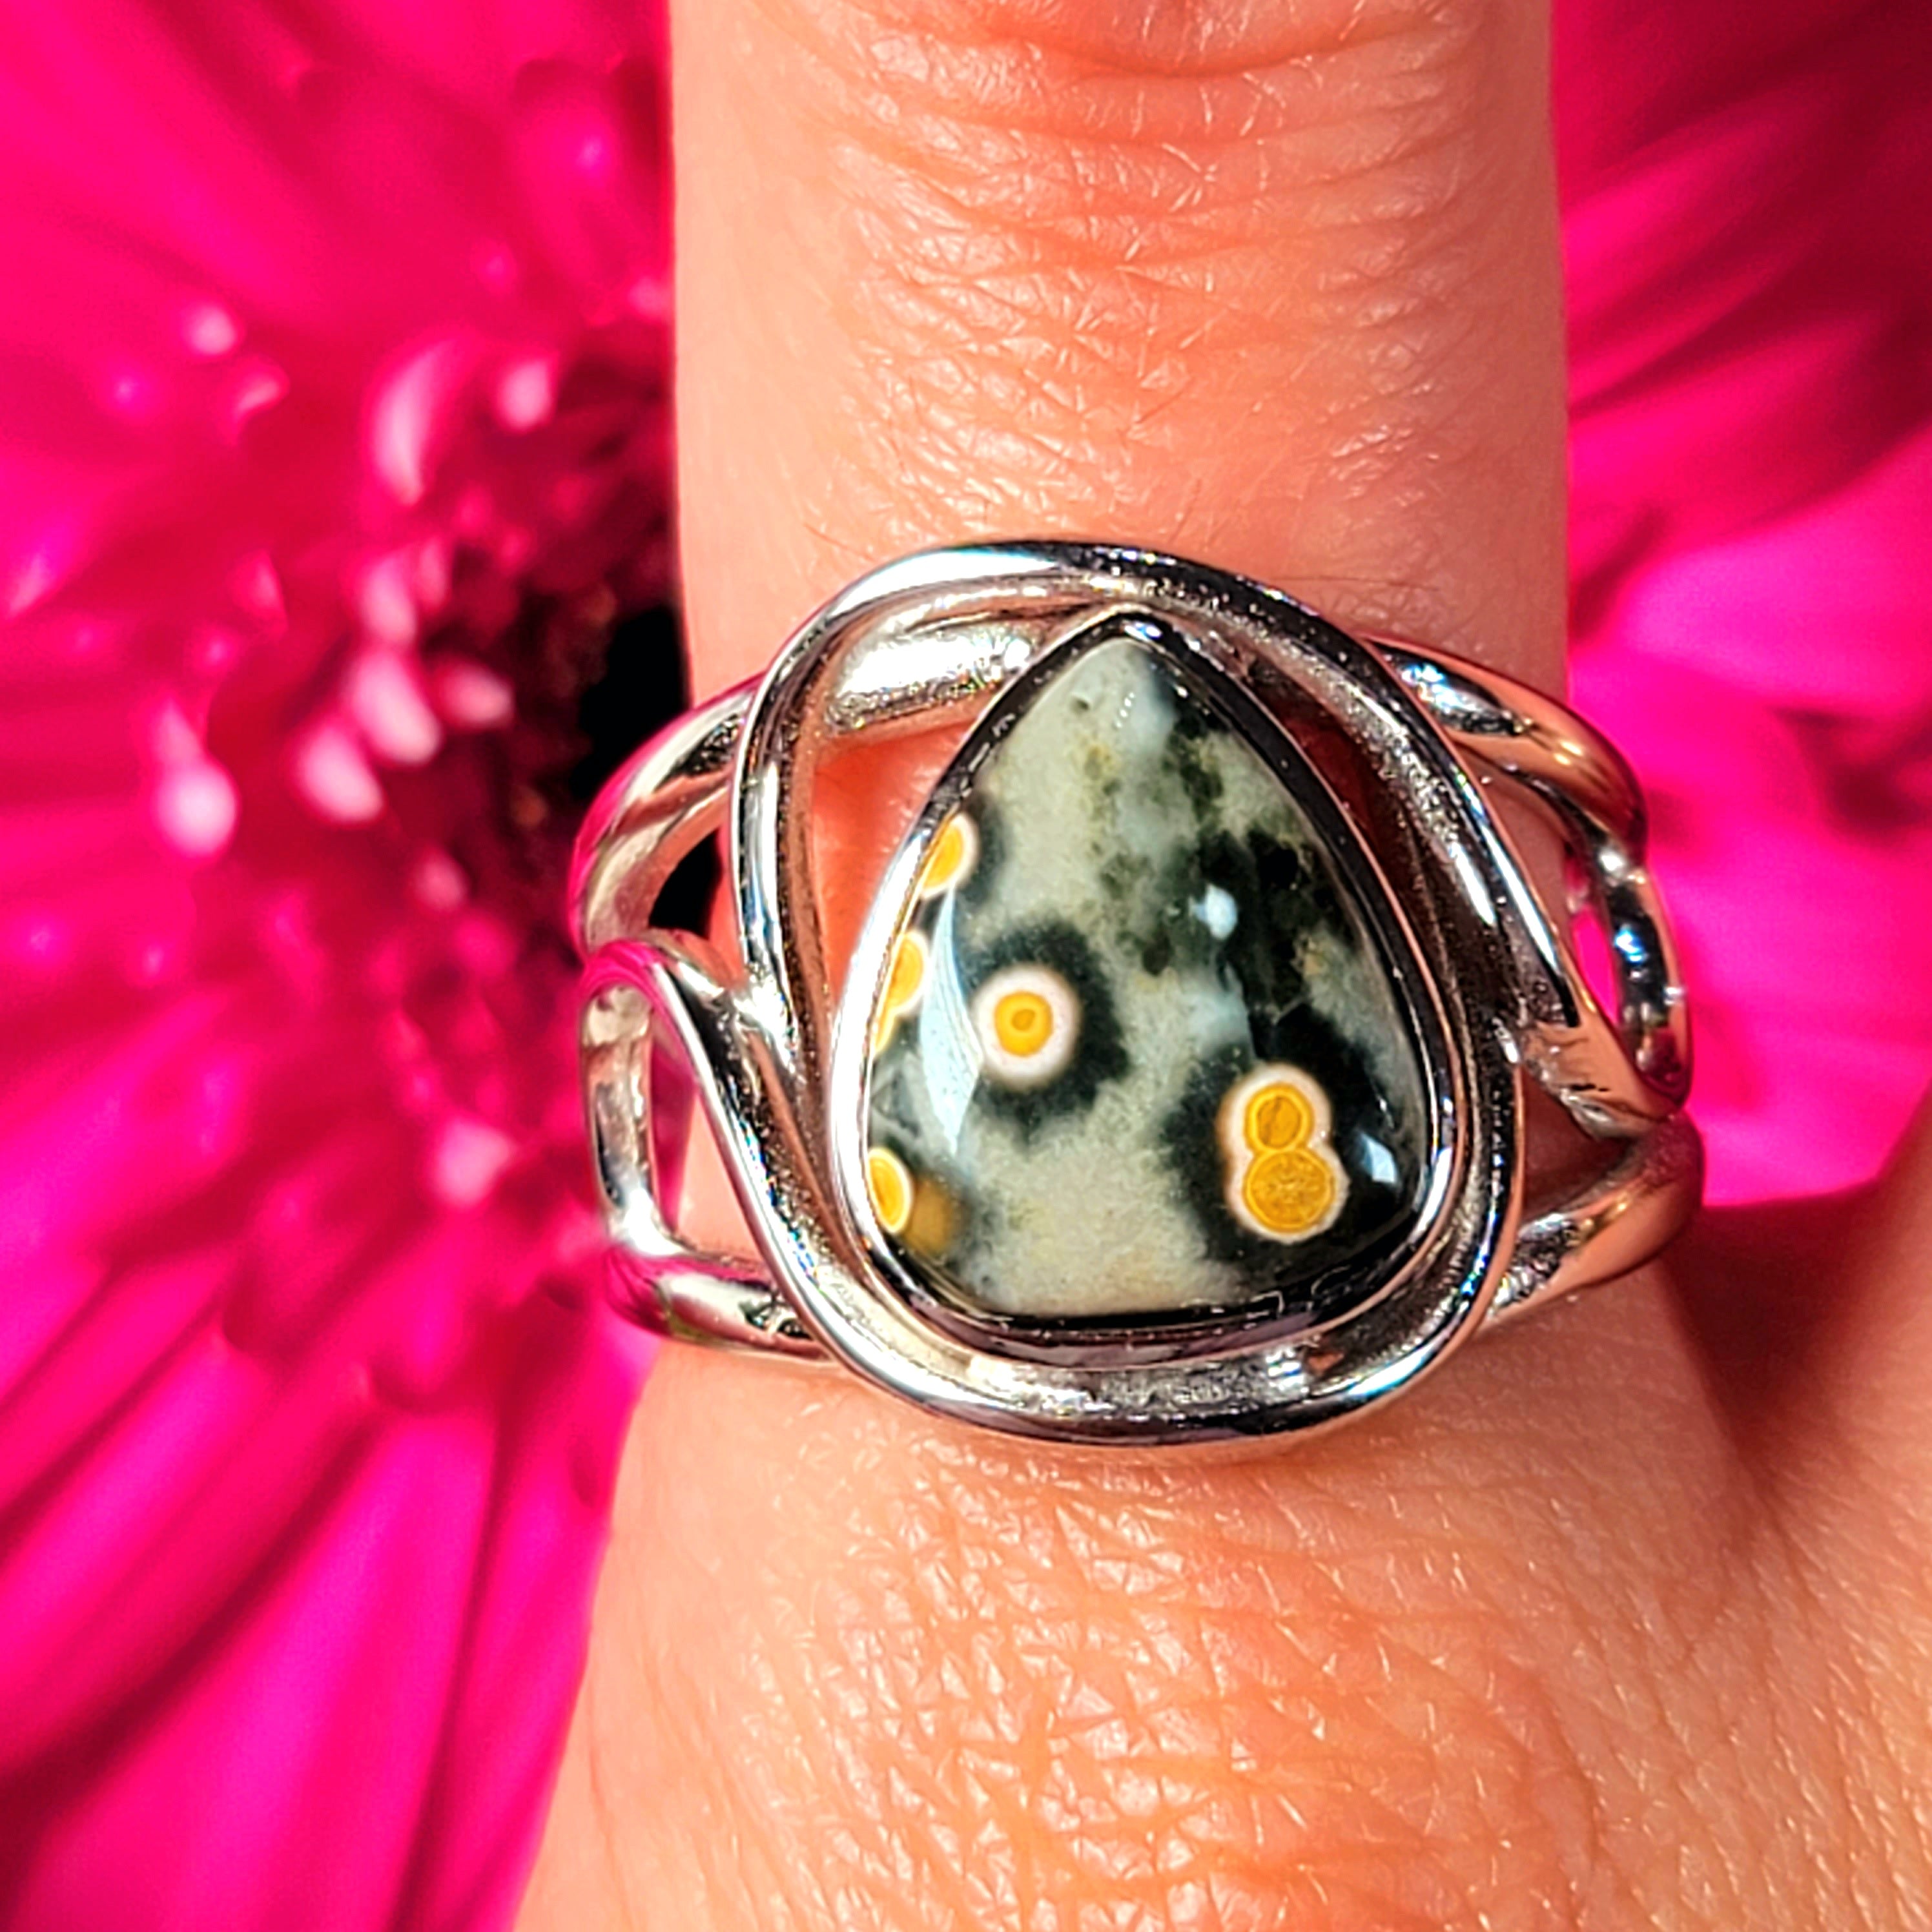 Orbicular "Ocean" Jasper Finger Cuff Adjustable Ring .925 Silver for Joy and Peace